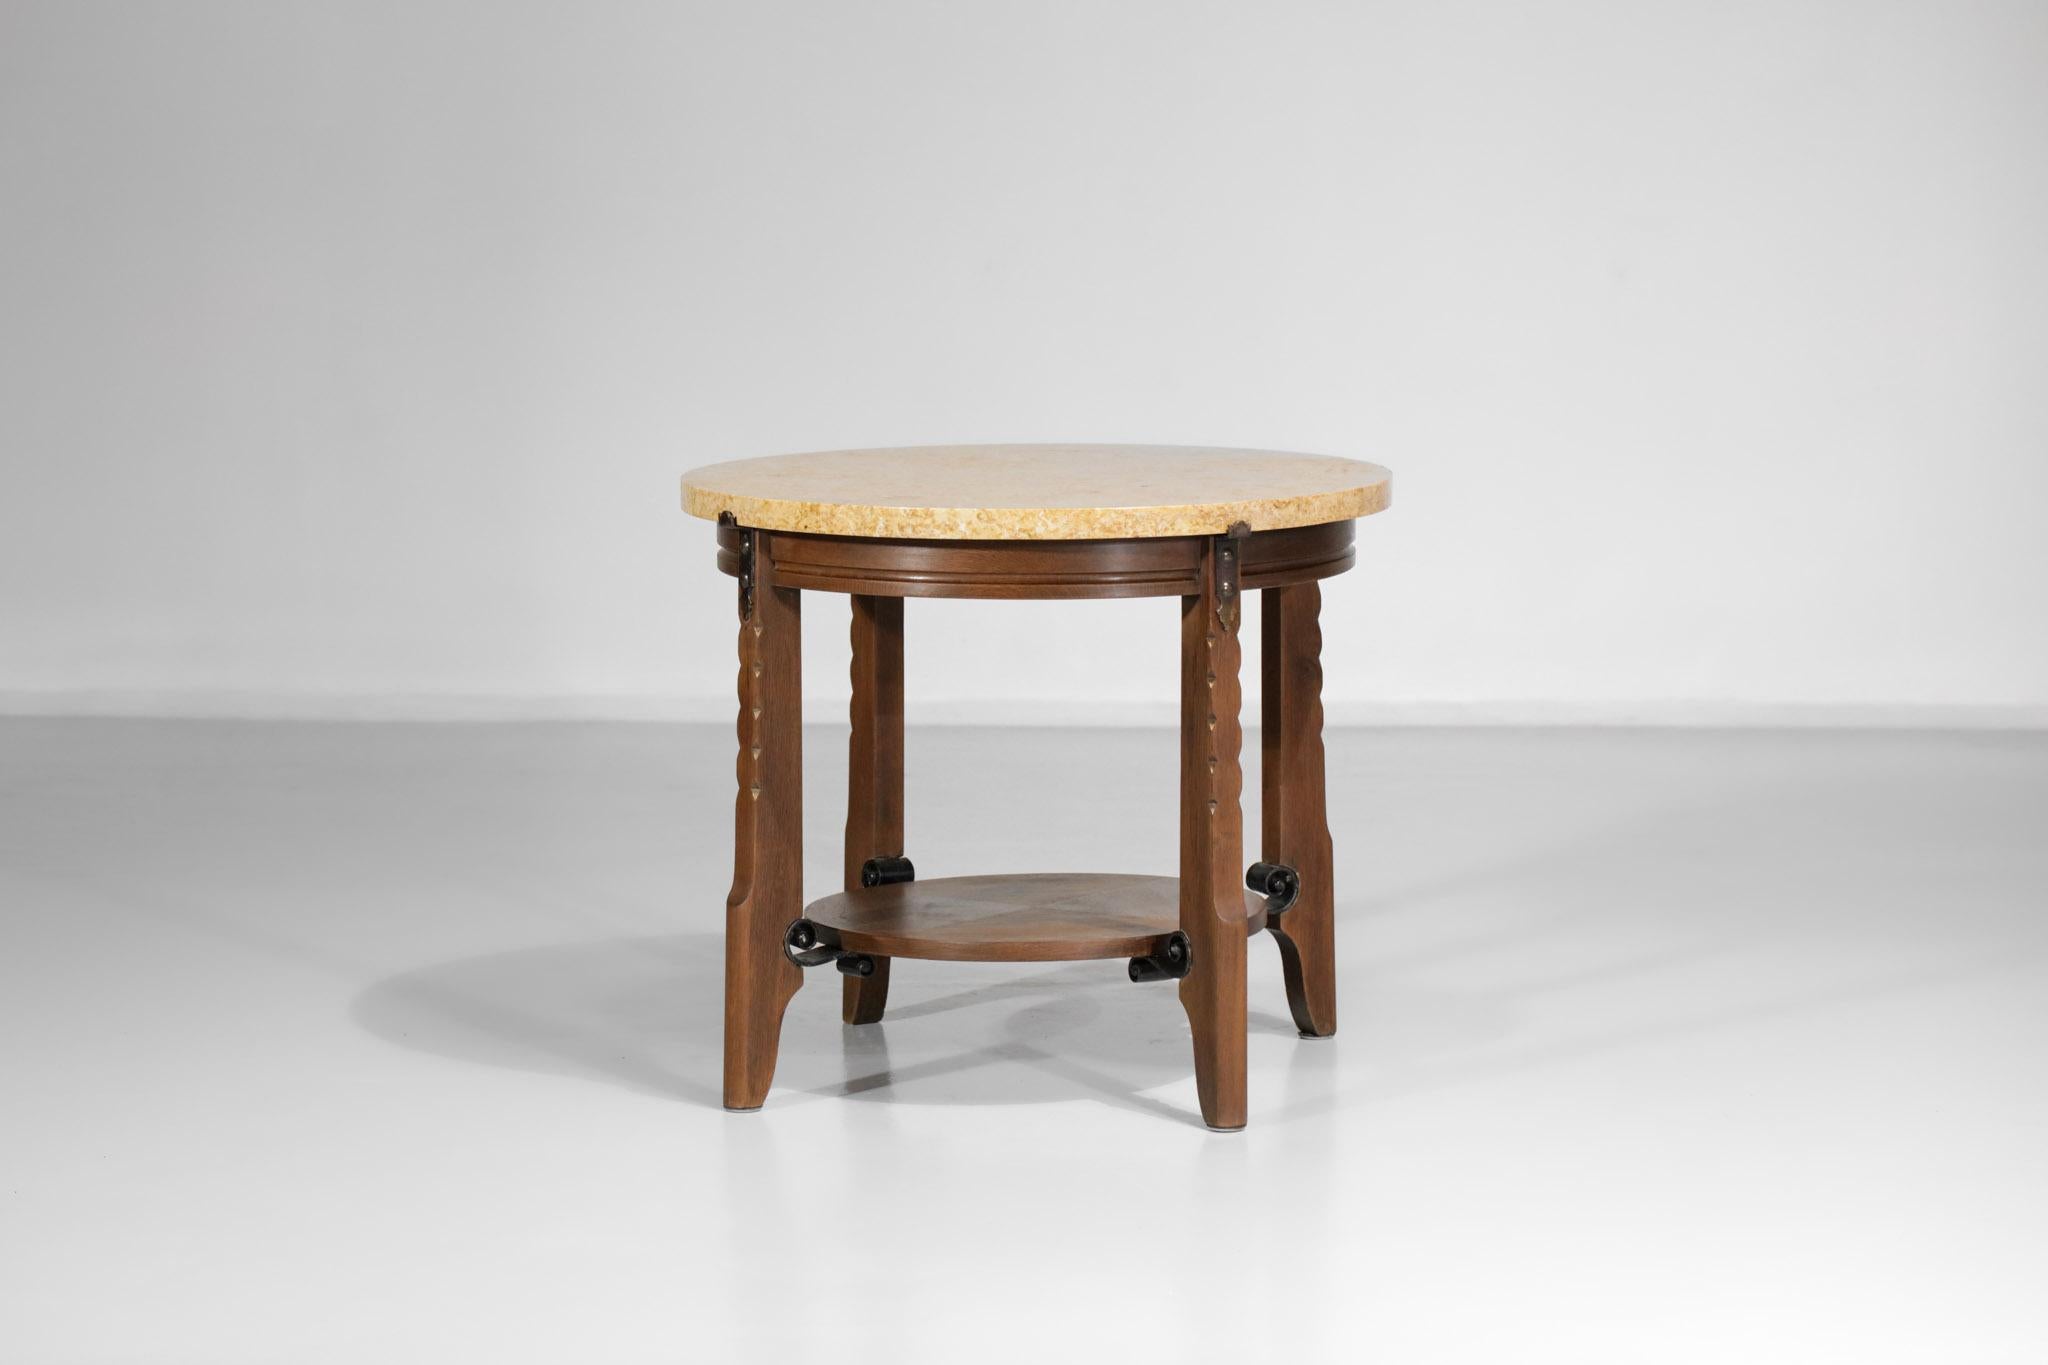 Oak and Travertine Art Deco Coffee Table 1930's Gueridon, E556 For Sale 5